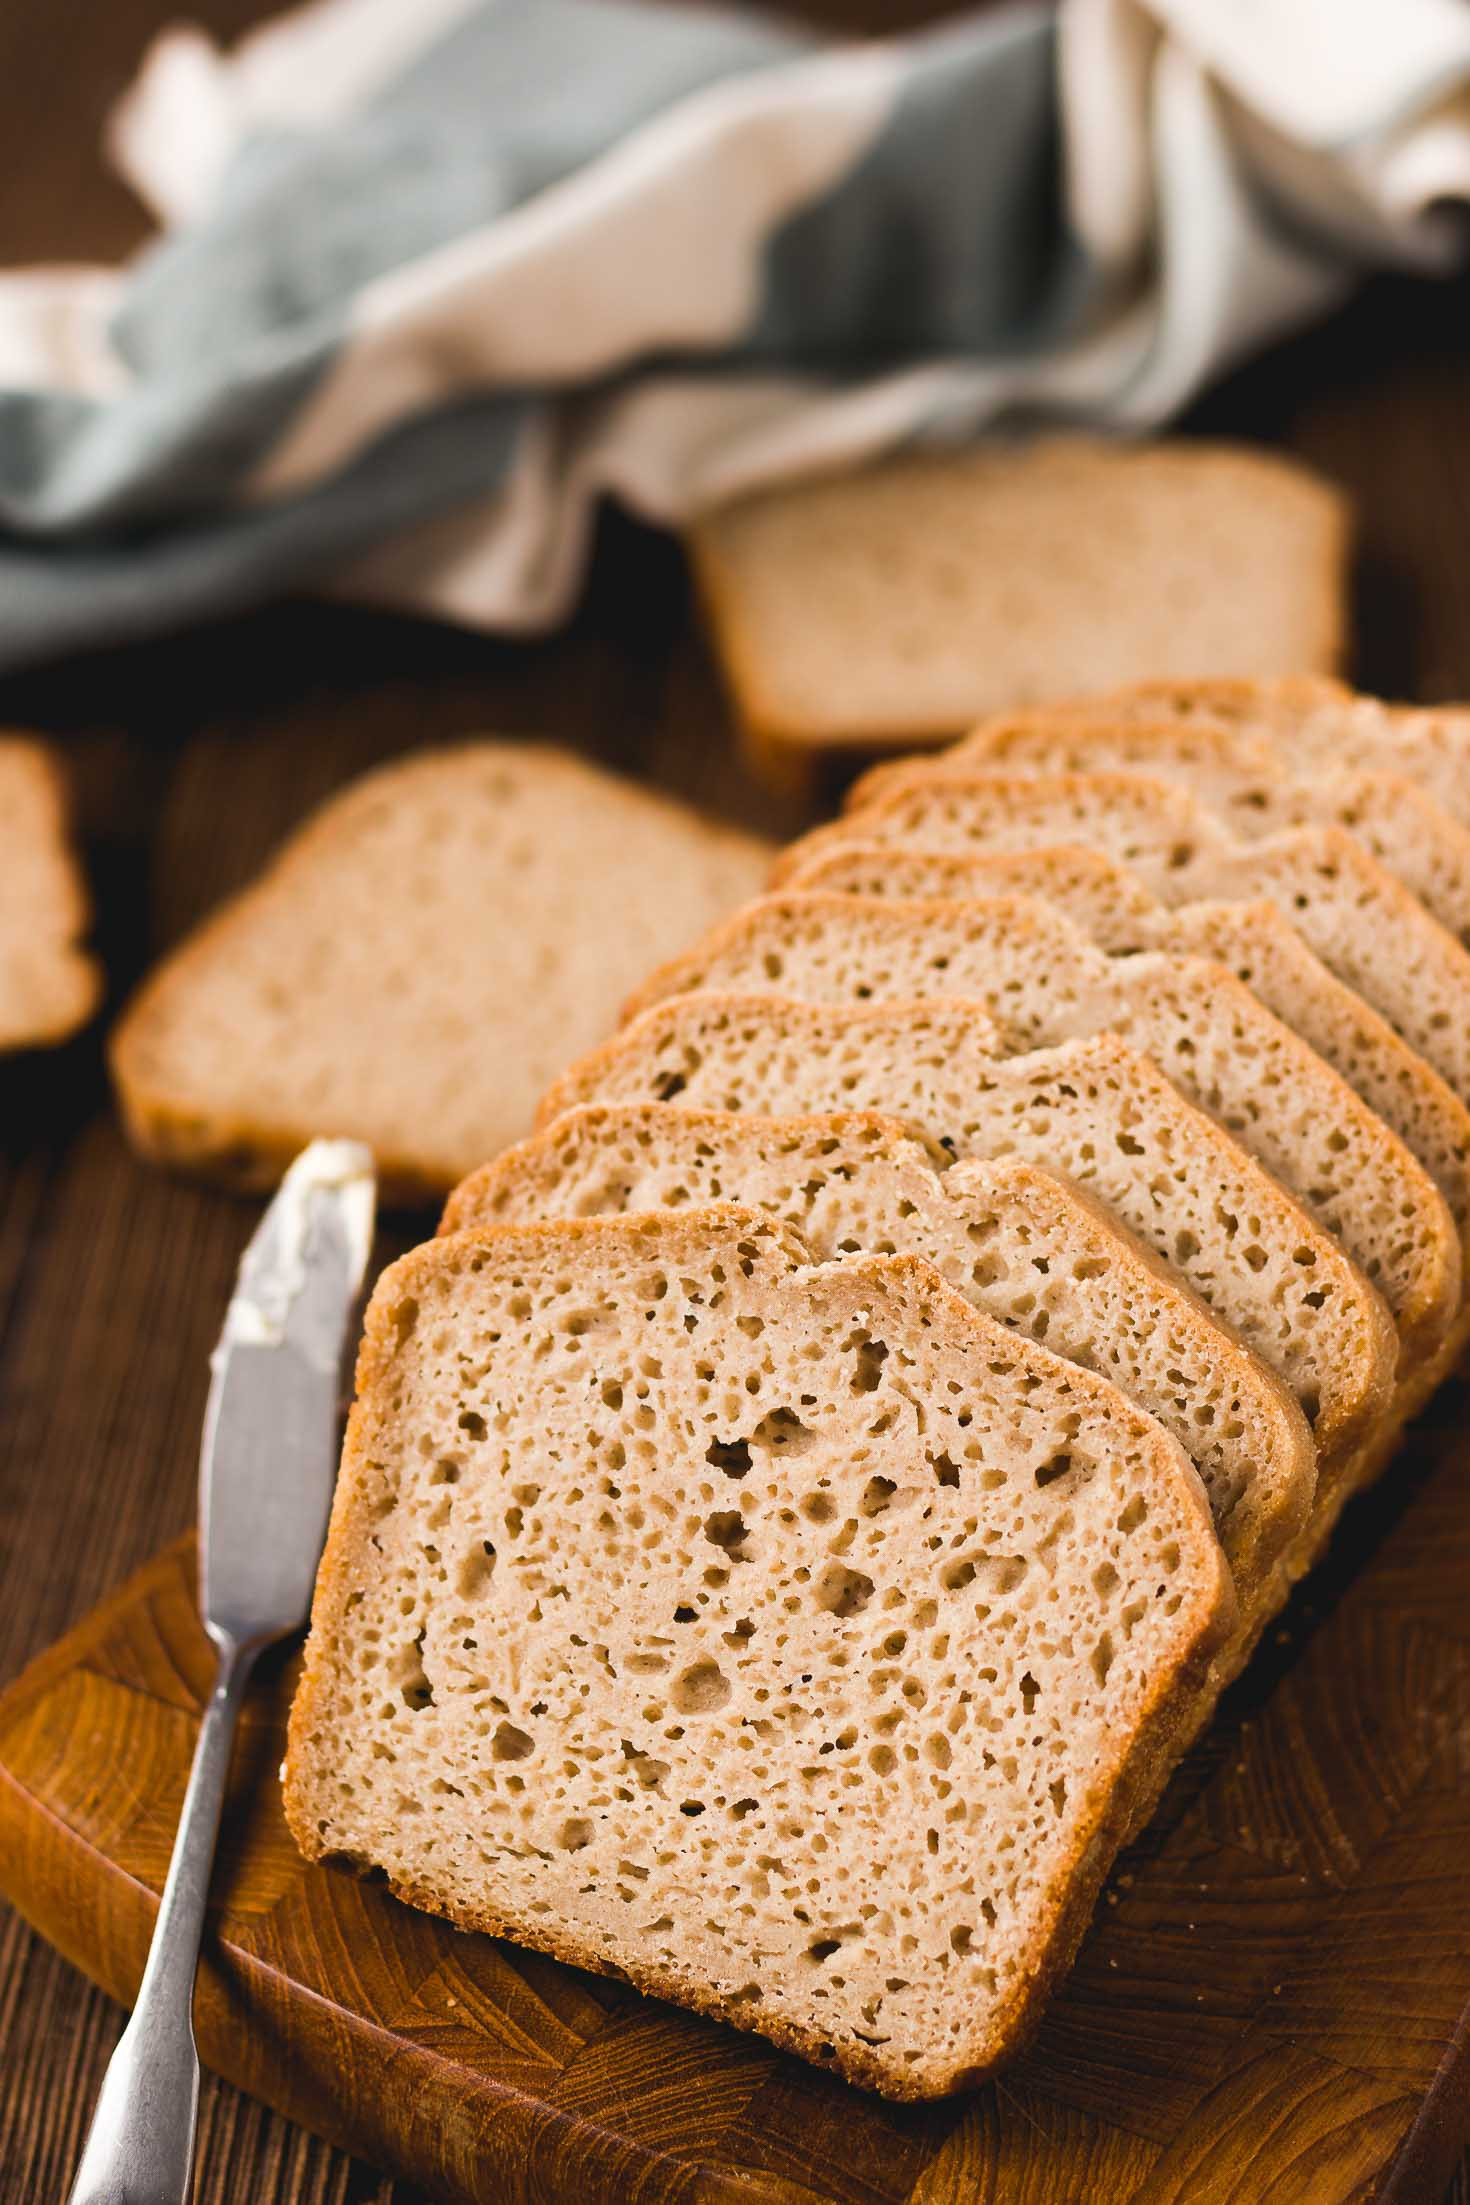 How To Make Gluten Free Bread
 The Best Homemade Gluten free Bread